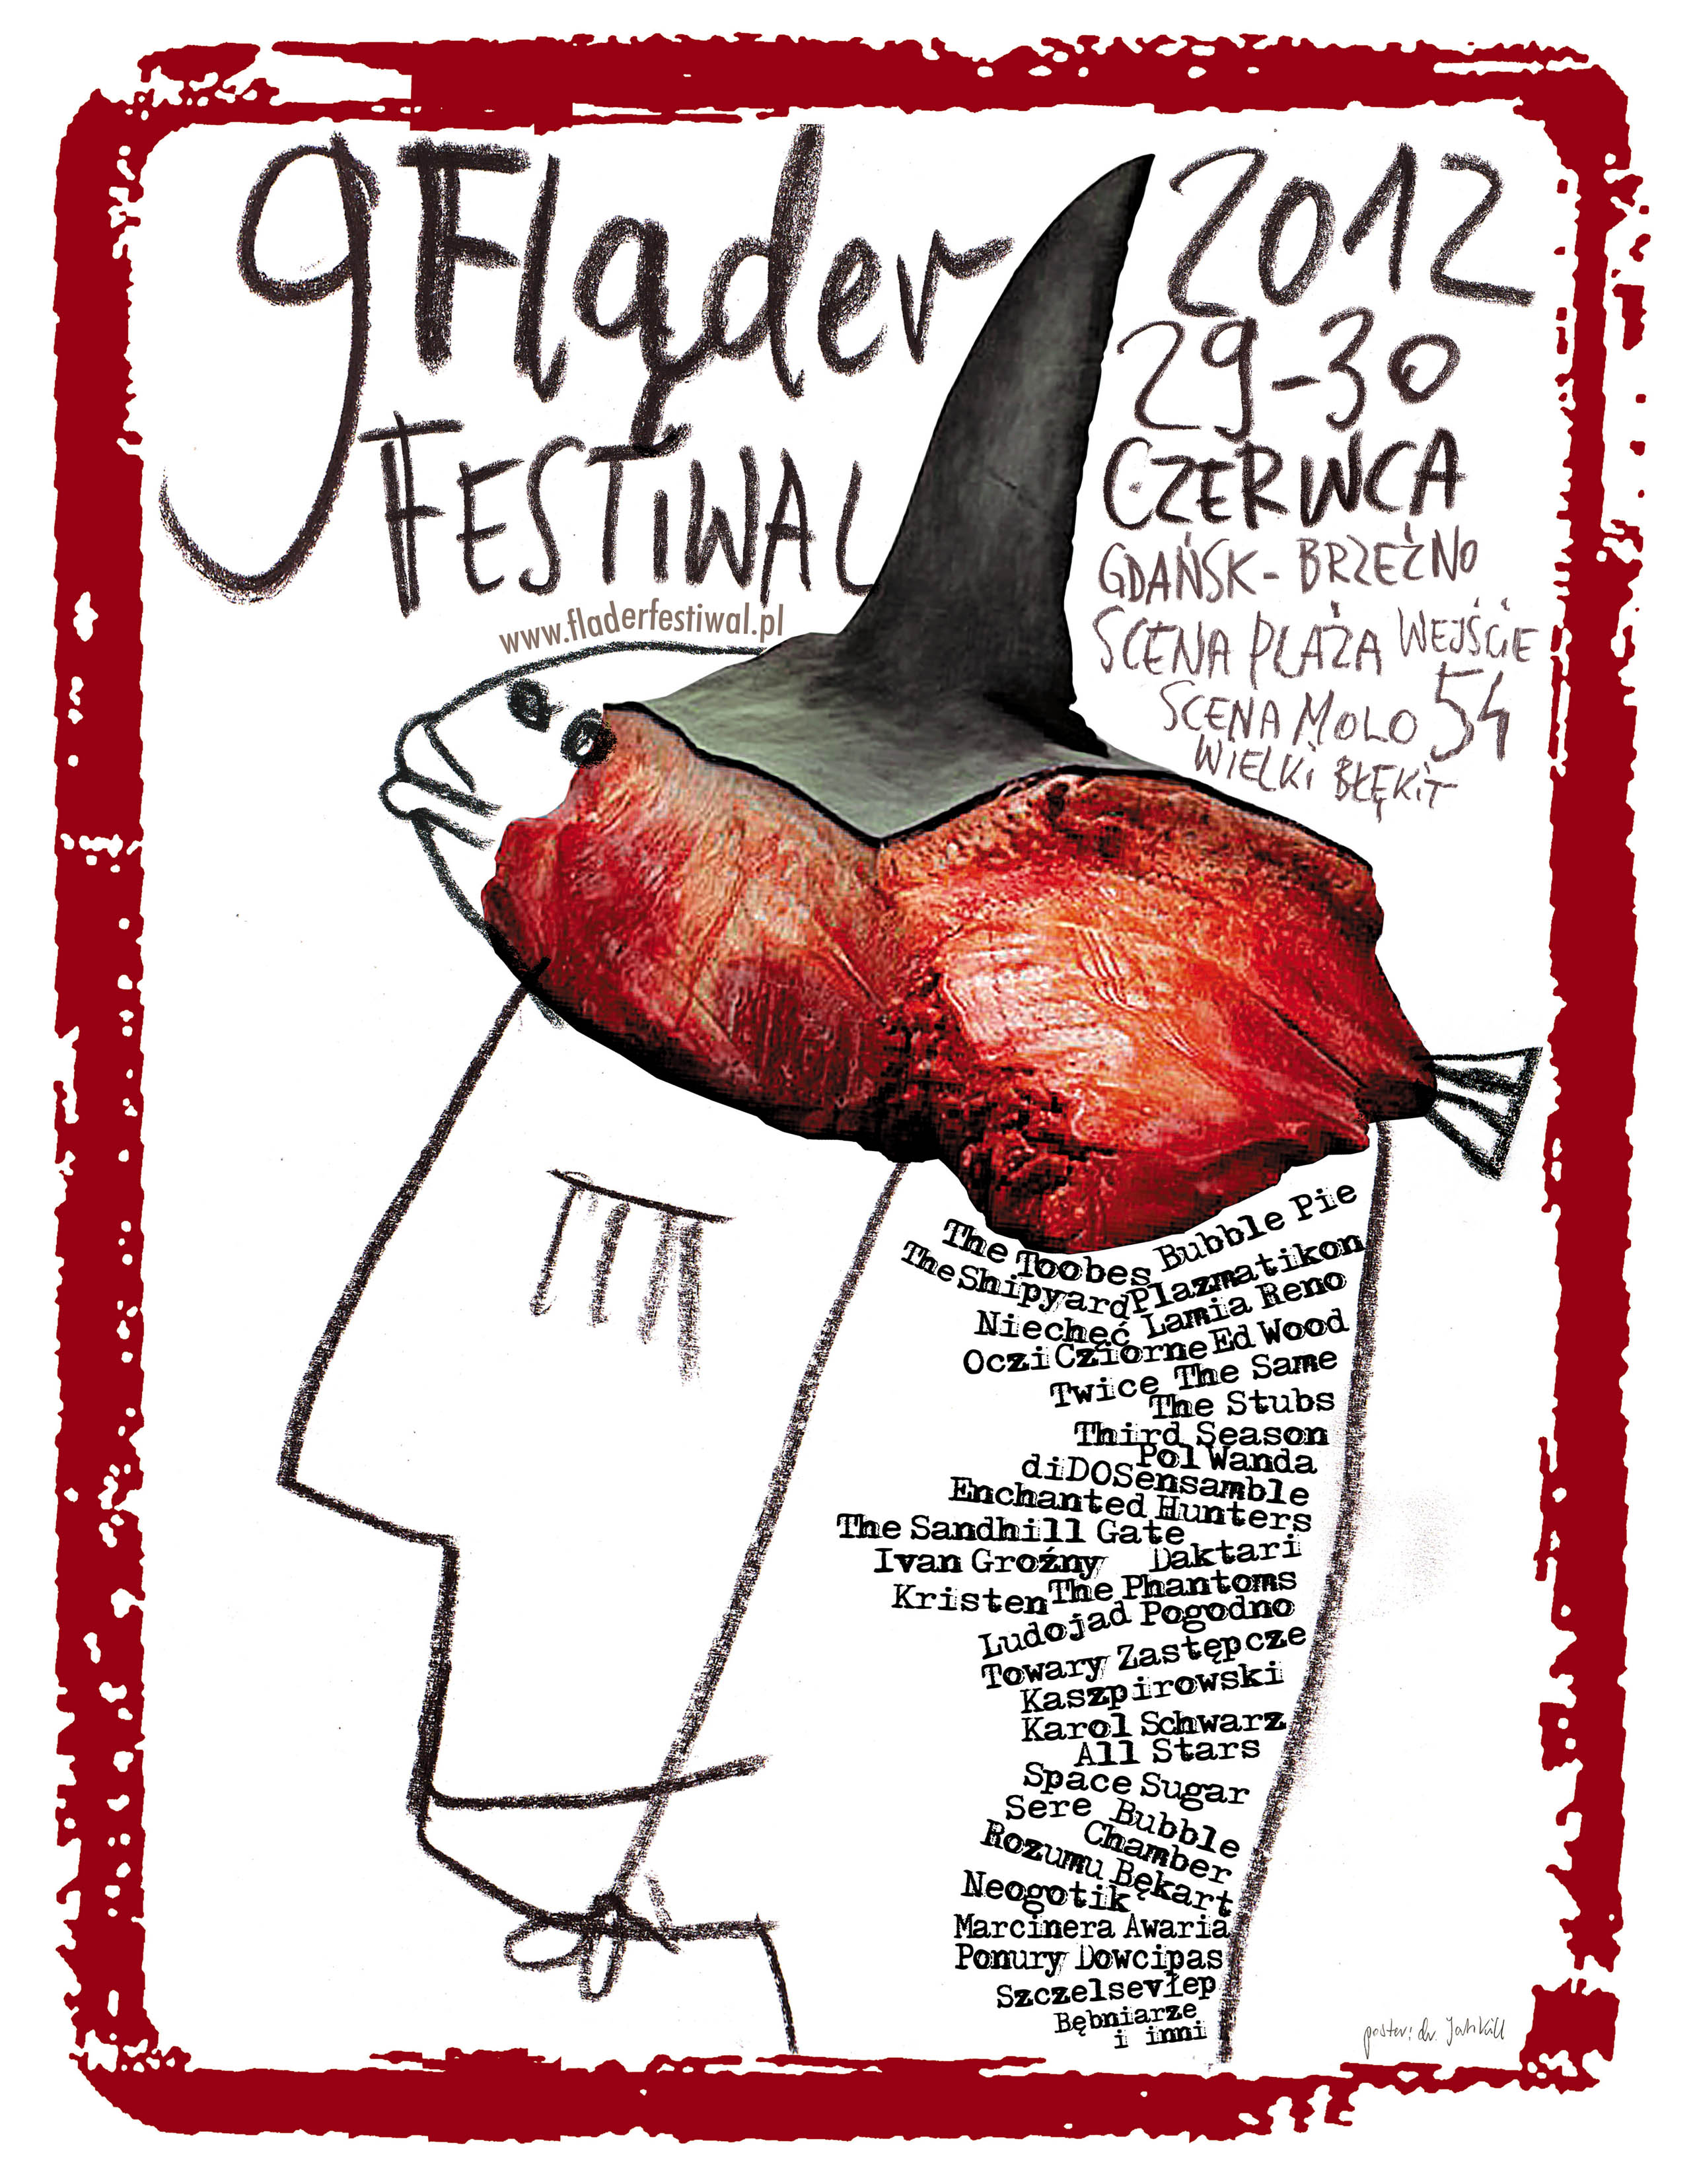 Plakat Fląder Festiwal 2012 (źródło: materiały prasowe organizatora)